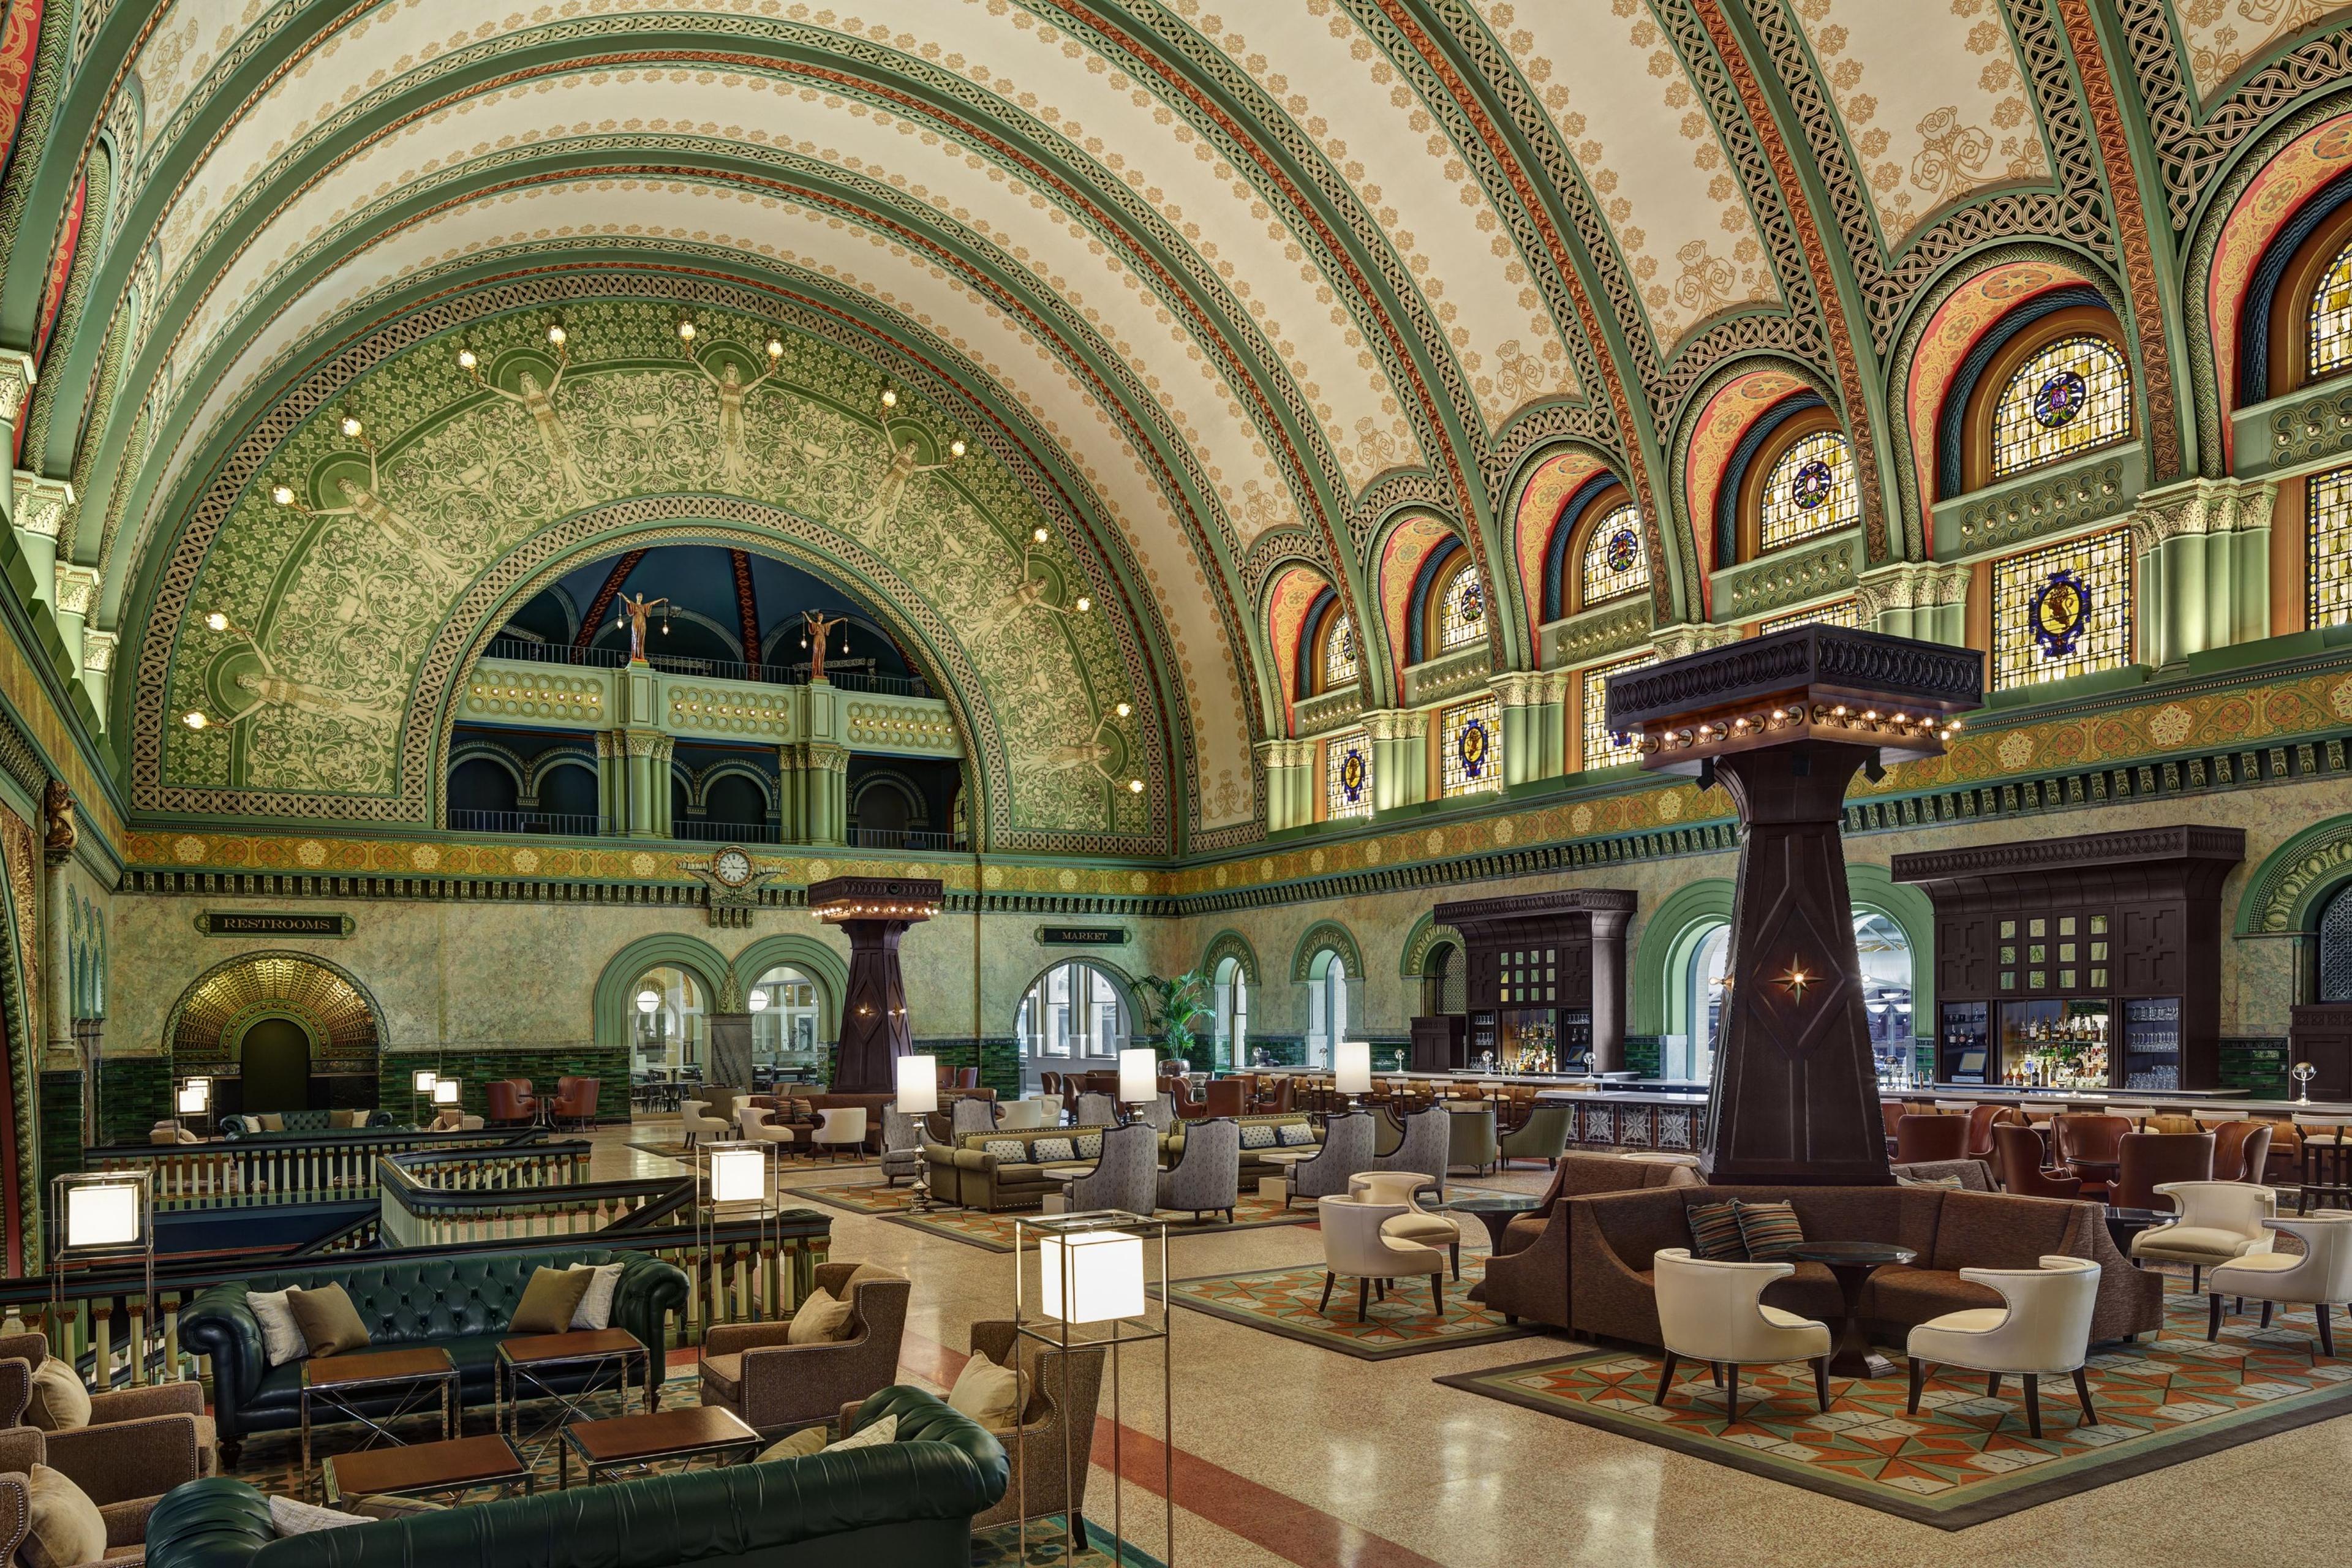 Grand Hall at Union Station